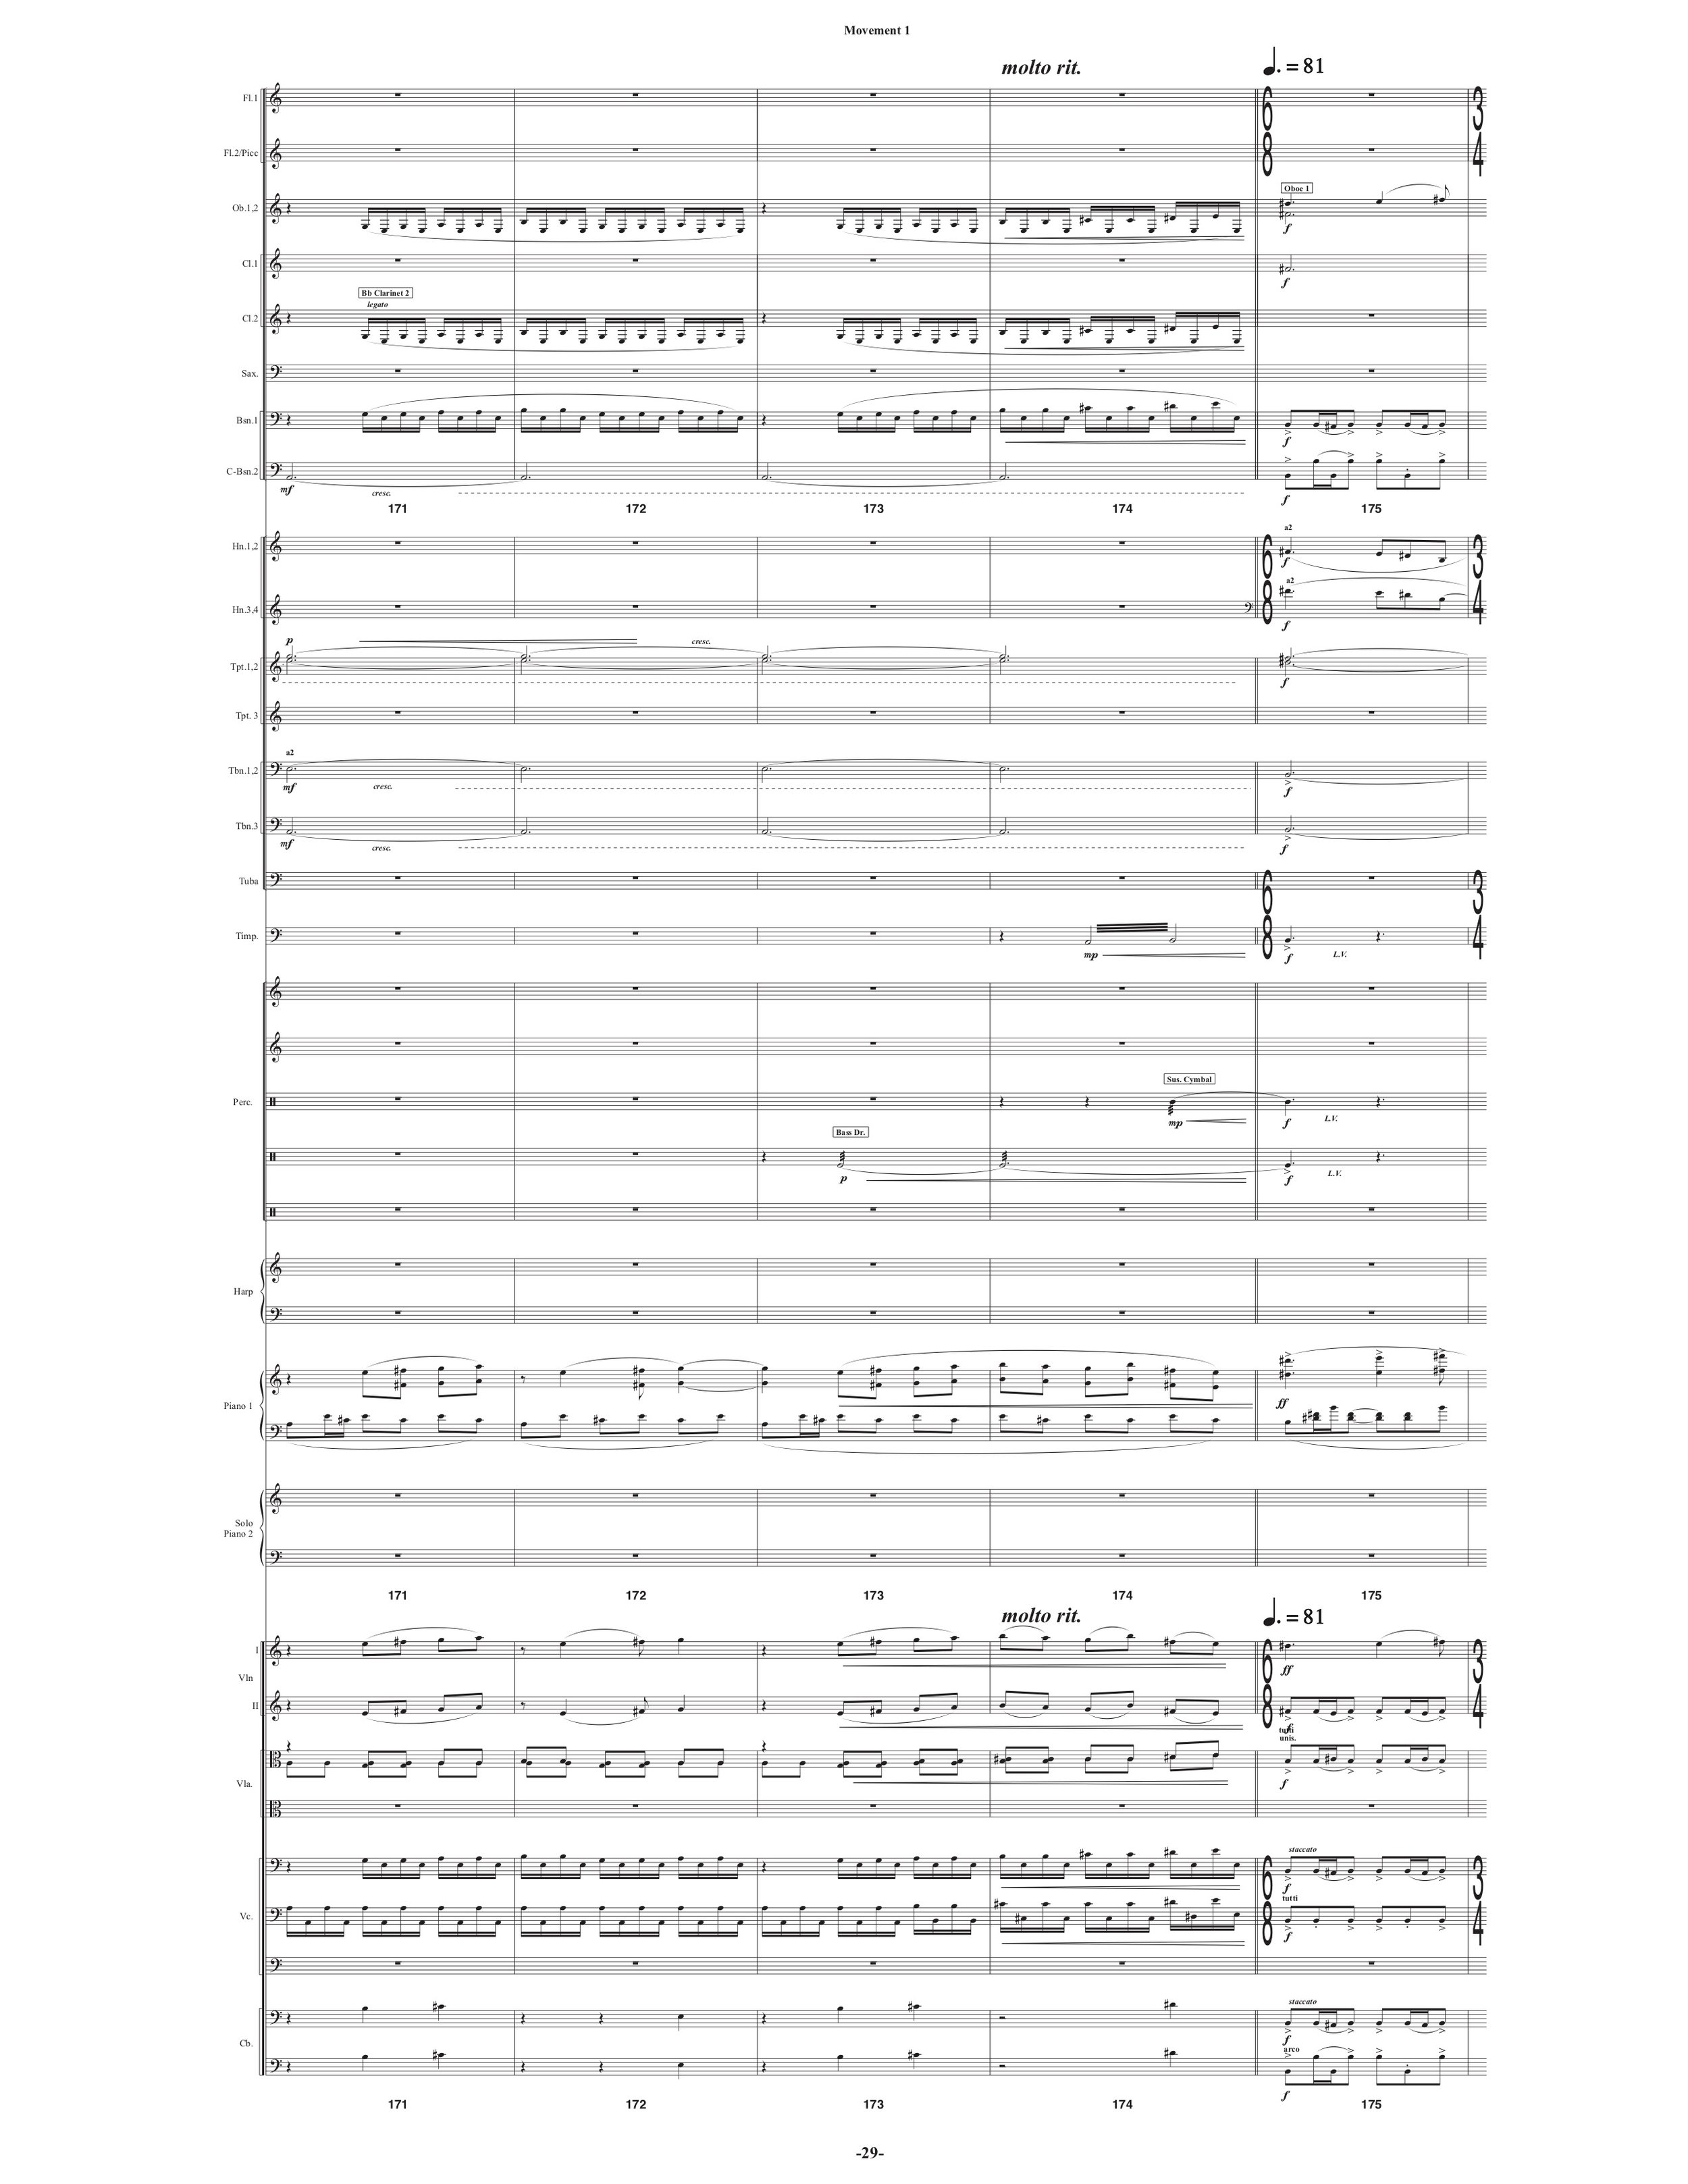 Symphony_Orch & 2 Pianos p34.jpg